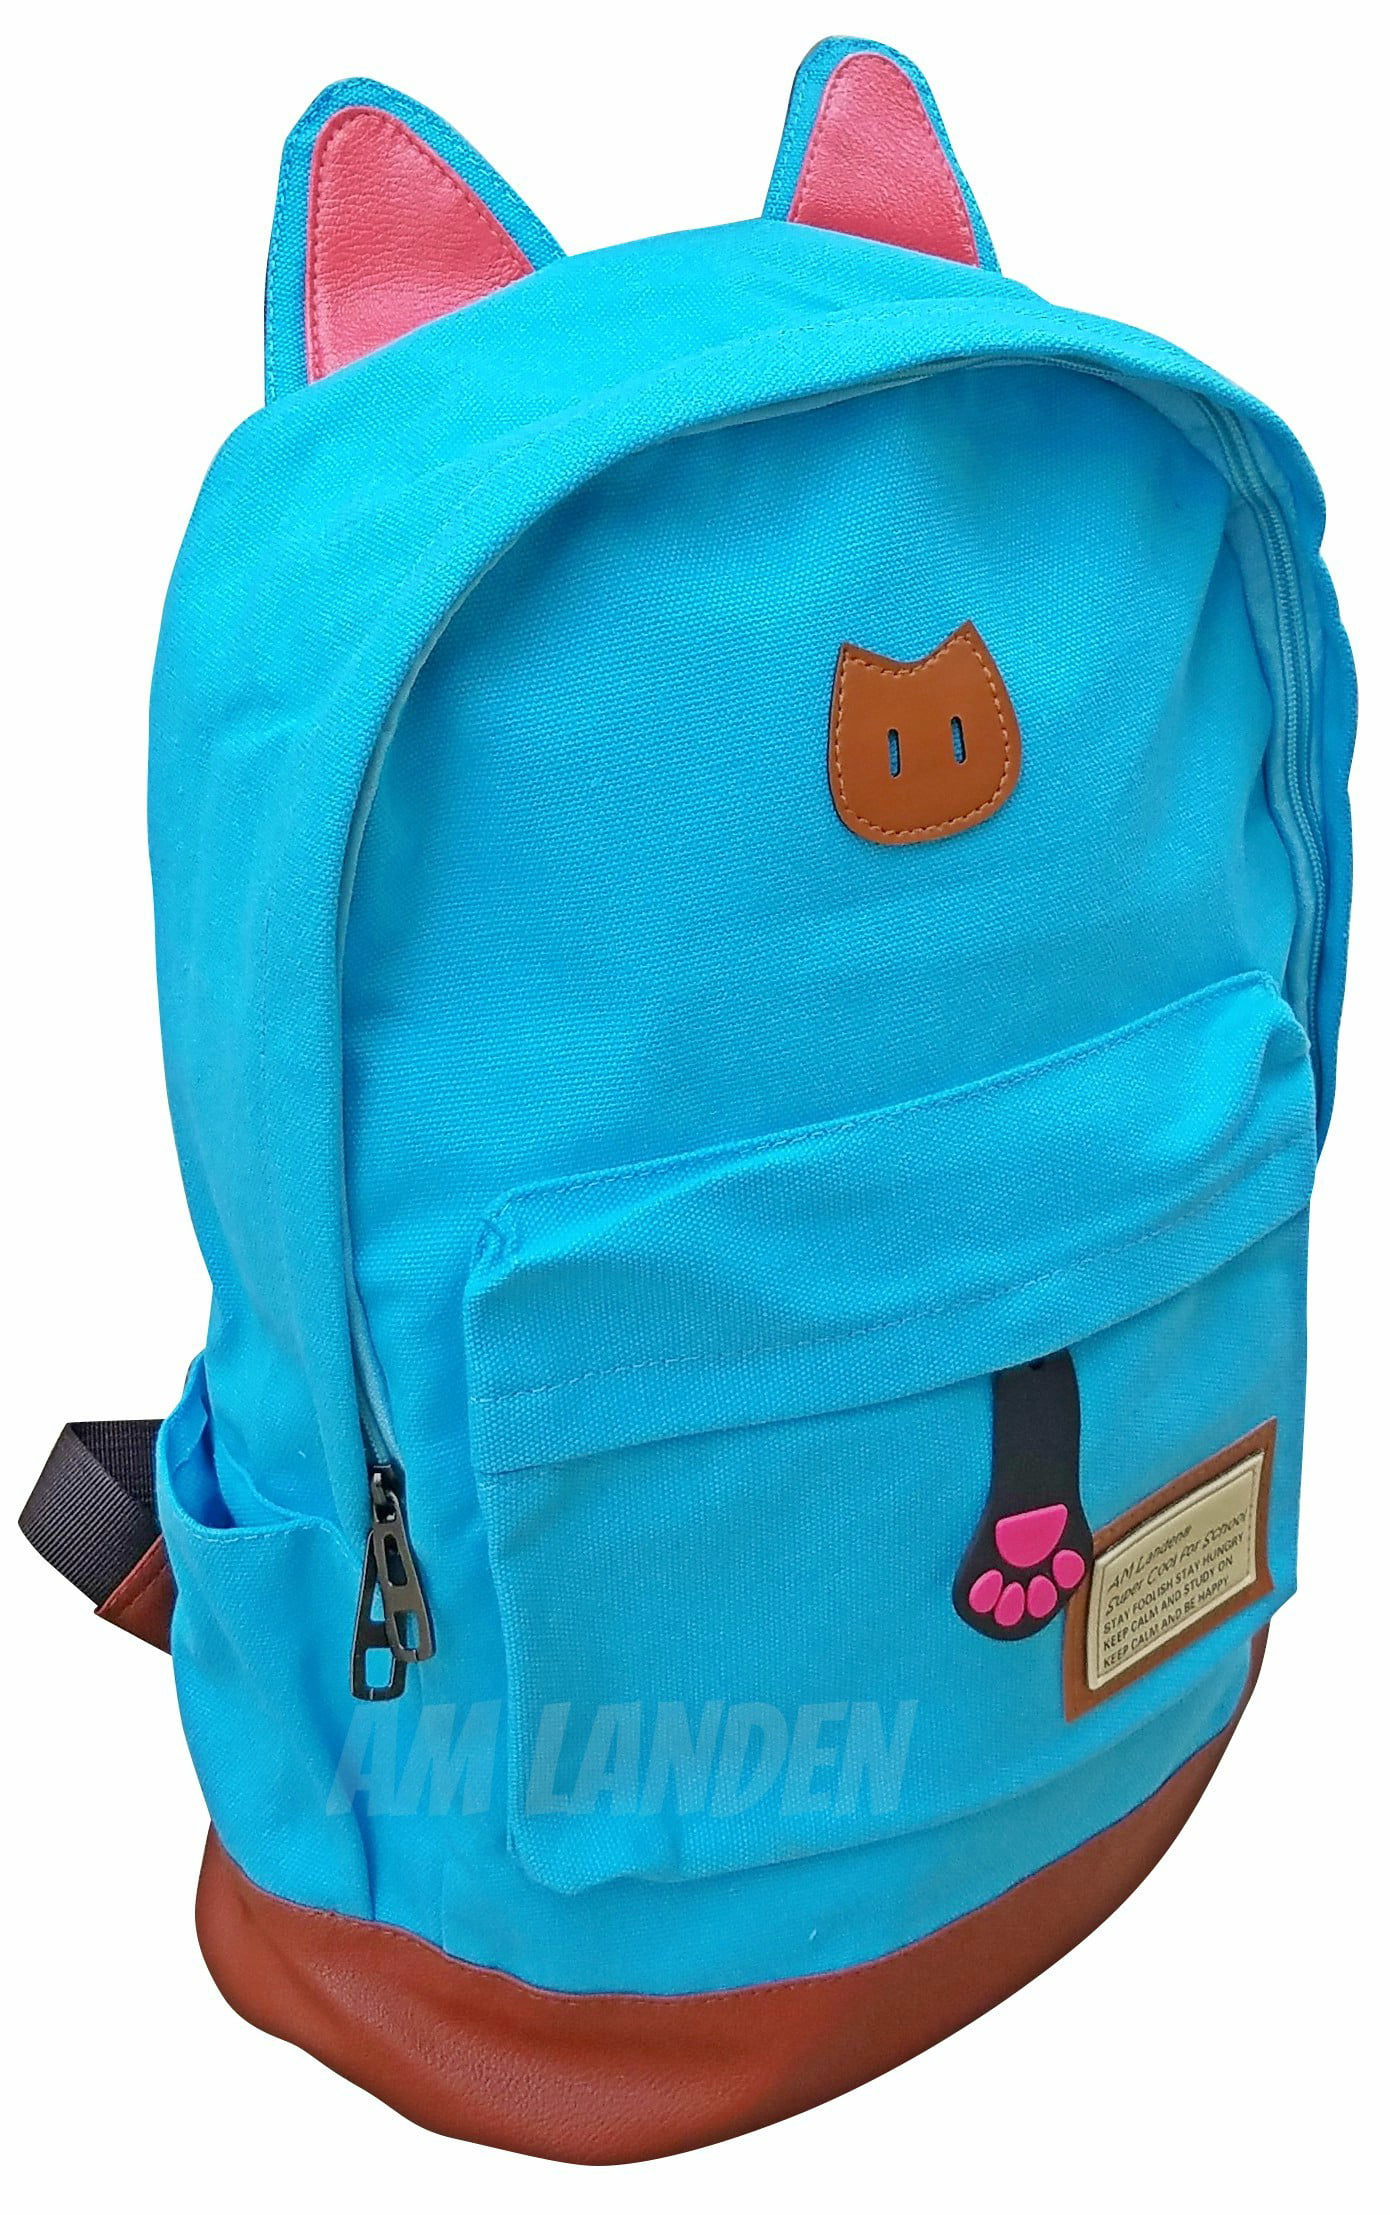 AM Landen Black Super Cute CAT Ears Backpack School Bag Travel Backpack 